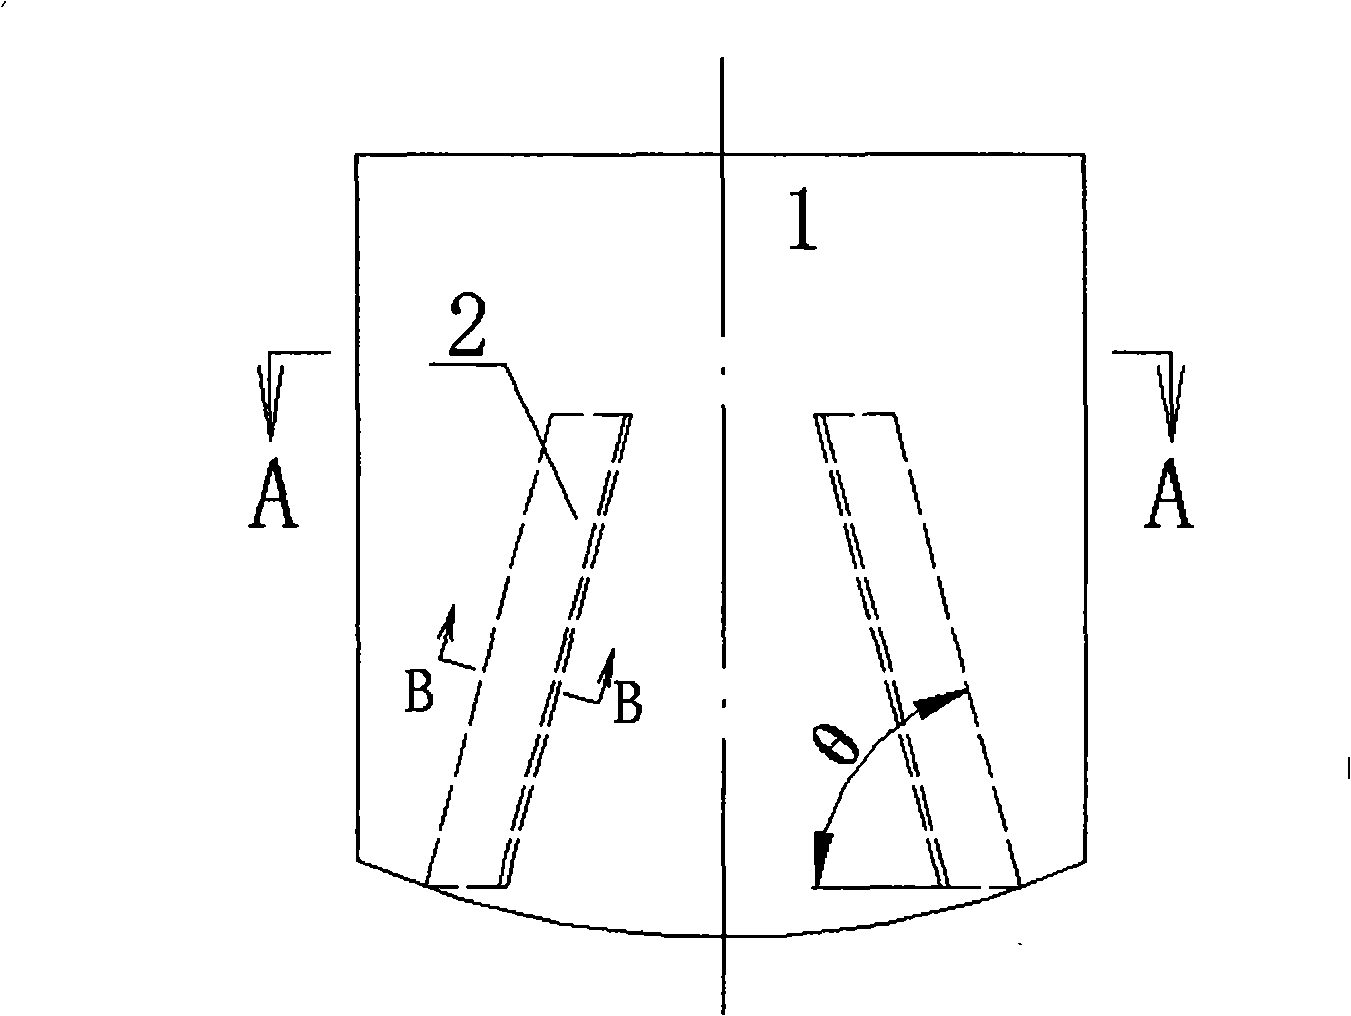 Column plate downcomer for evenly distributing liquid stream